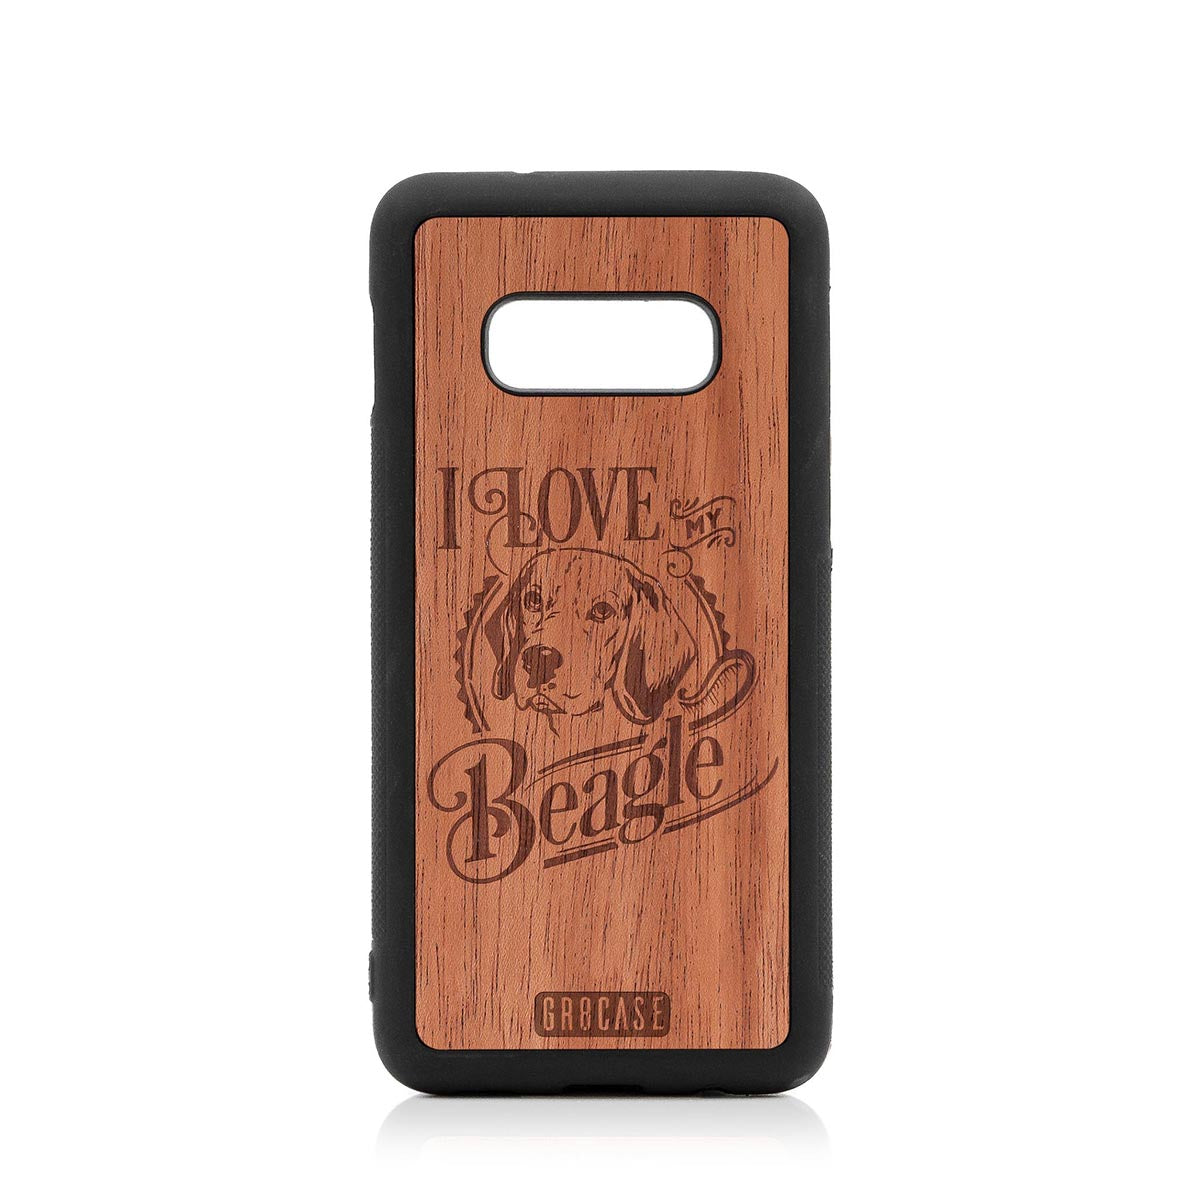 I Love My Beagle Design Wood Case Samsung Galaxy S10E by GR8CASE